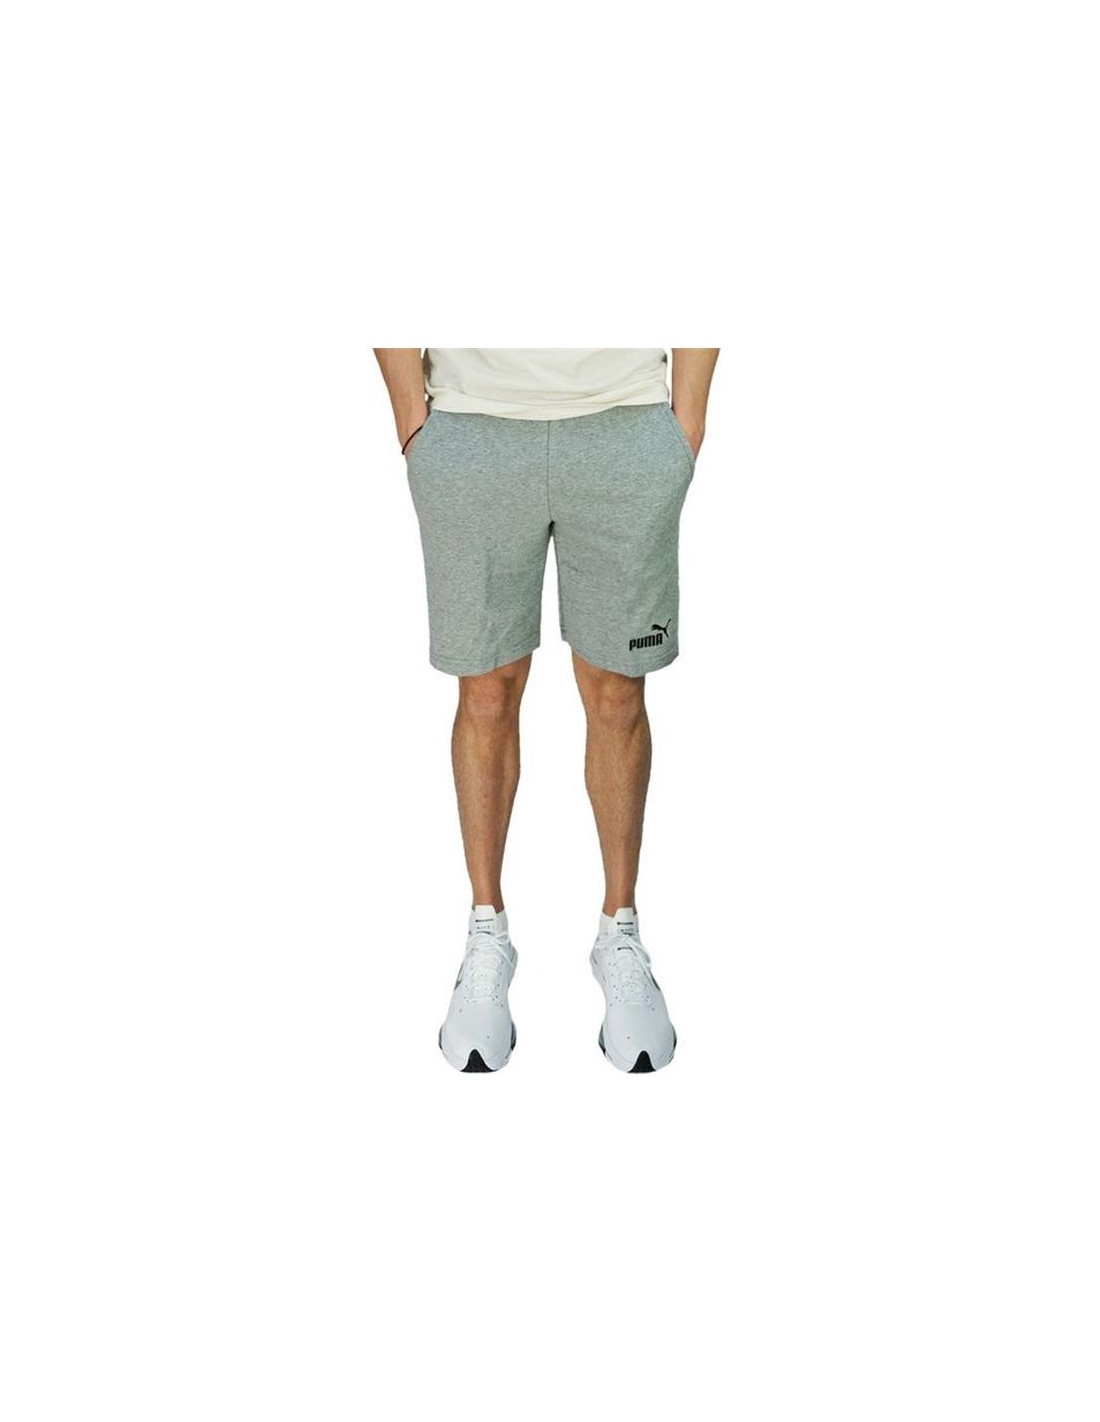 Pantalones cortos puma essentials shorts m grey